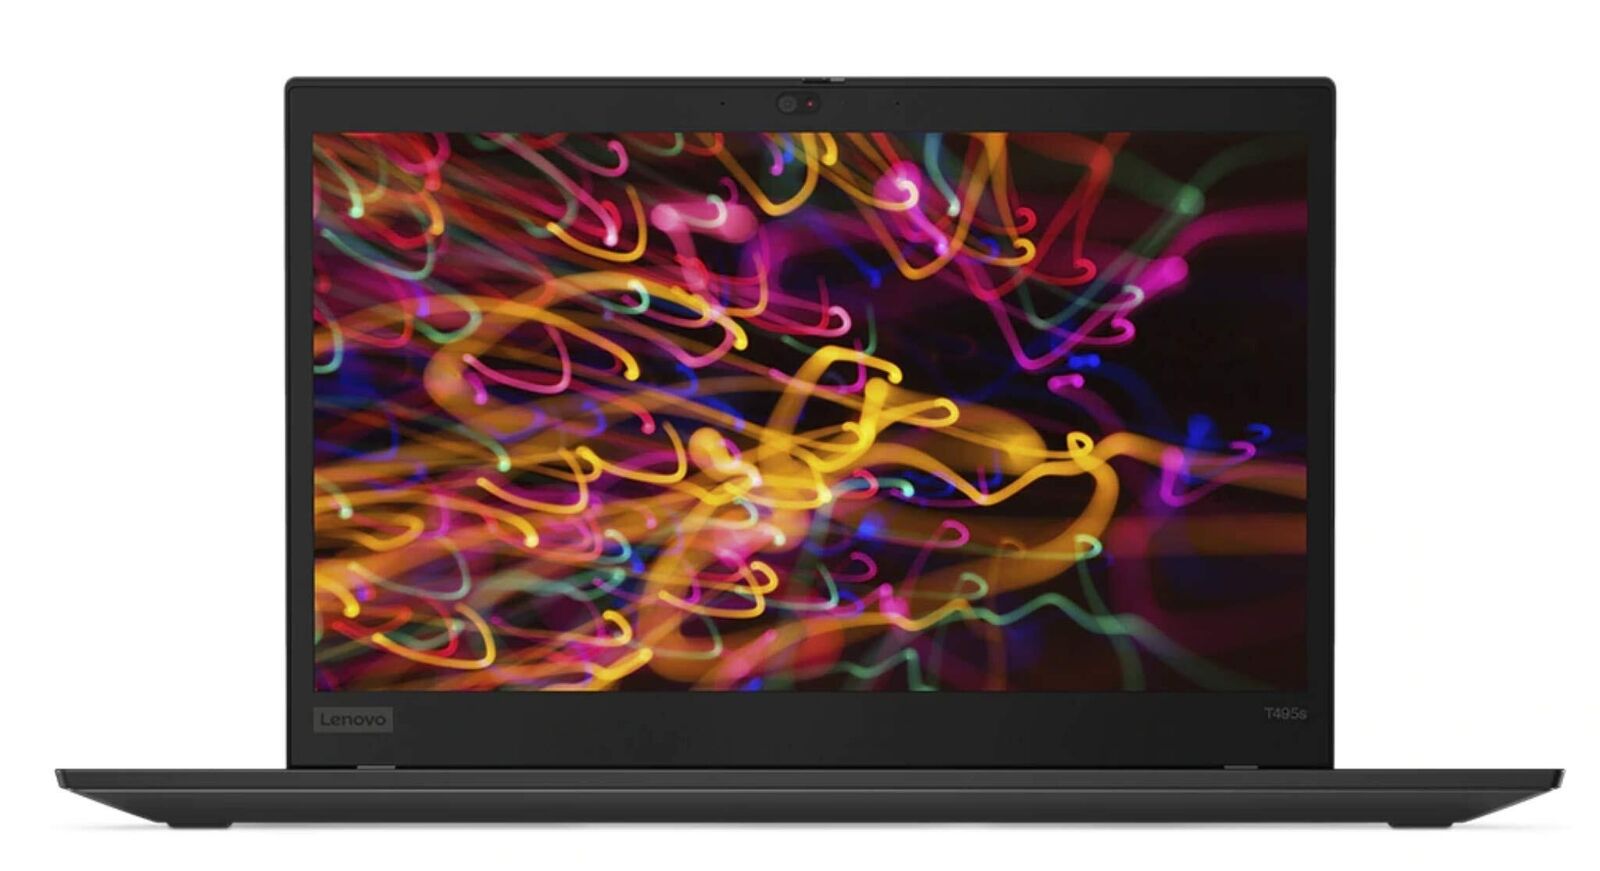 Lenovo ThinkPad T495s Laptop AMD Ryzen 5 PRO 3500U 16GB RAM 256GB SSD Windows 10